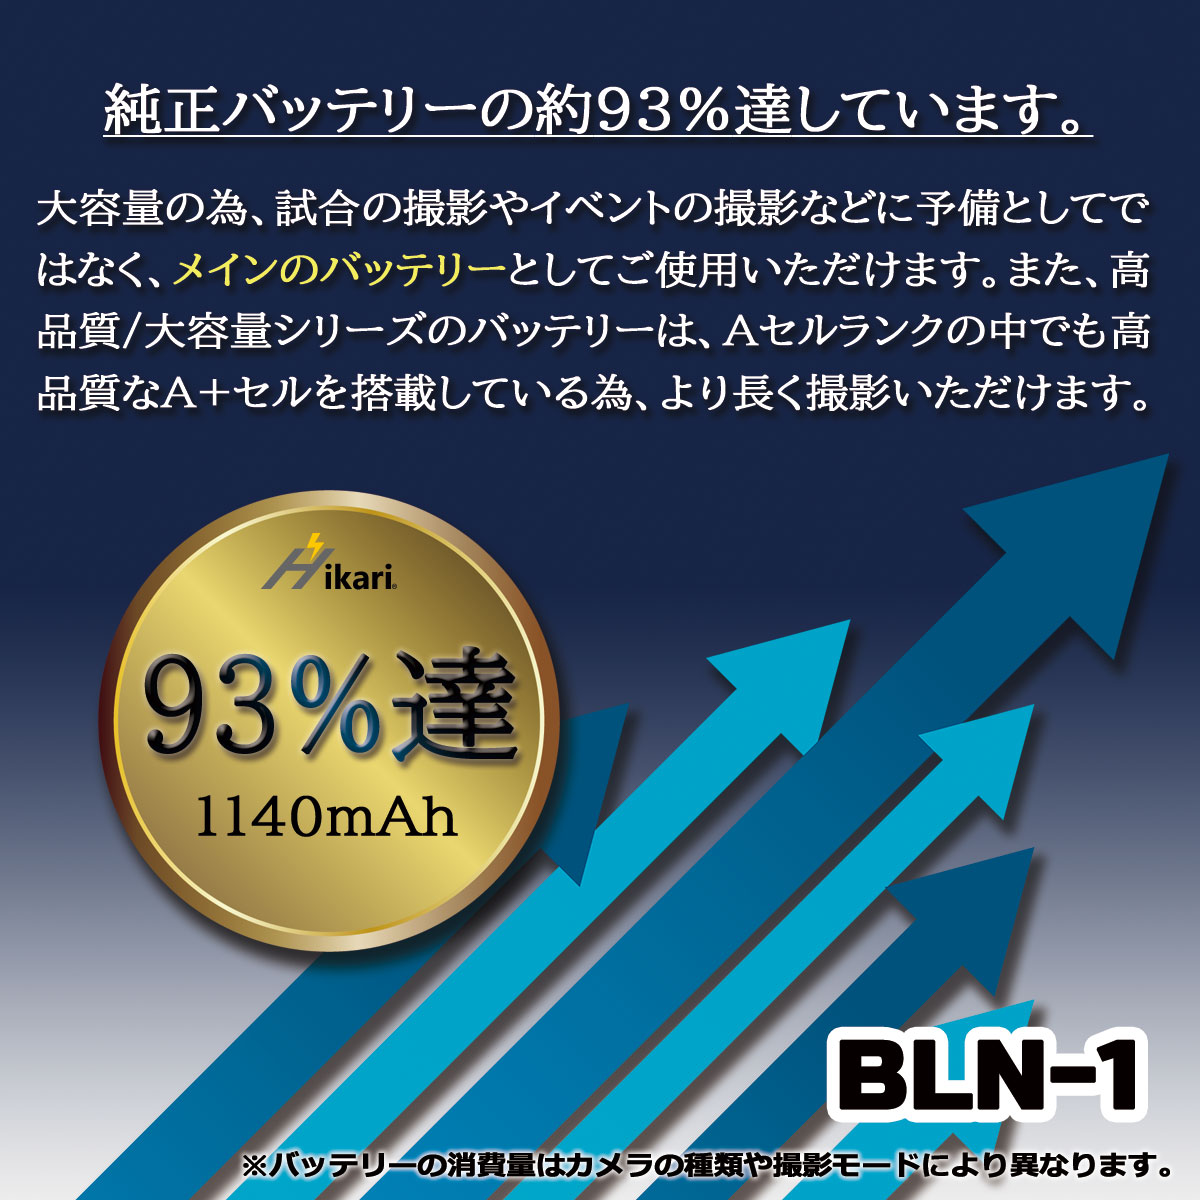 BLN-1 OLYMPUS オリンパス 互換バッテリー 2個セット 高品質セル搭載